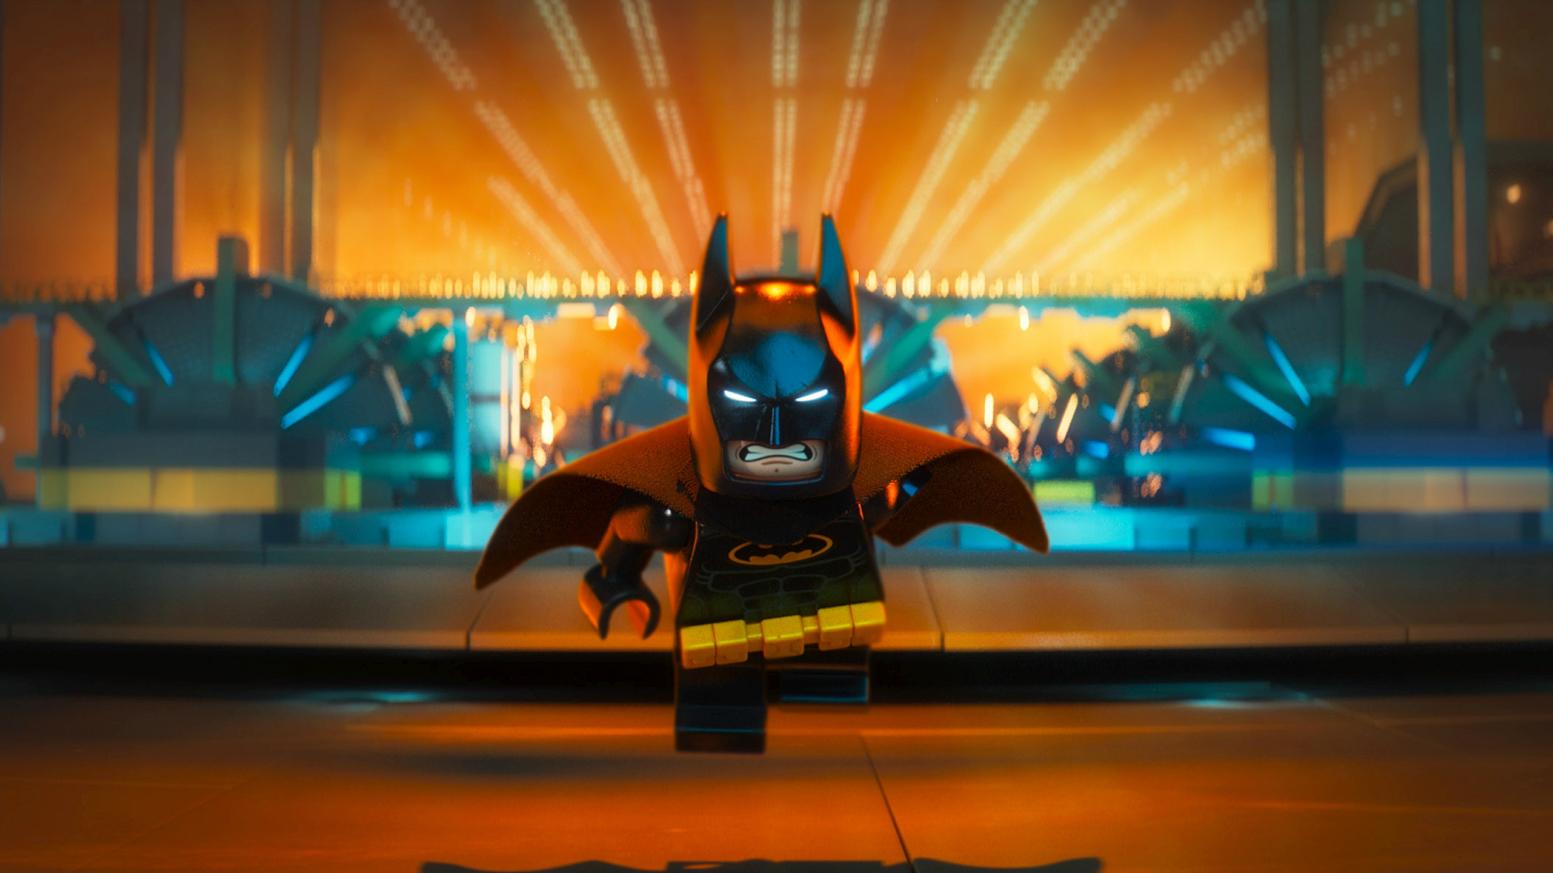 Lego Batman Movie trailer spoofs Batman v Superman